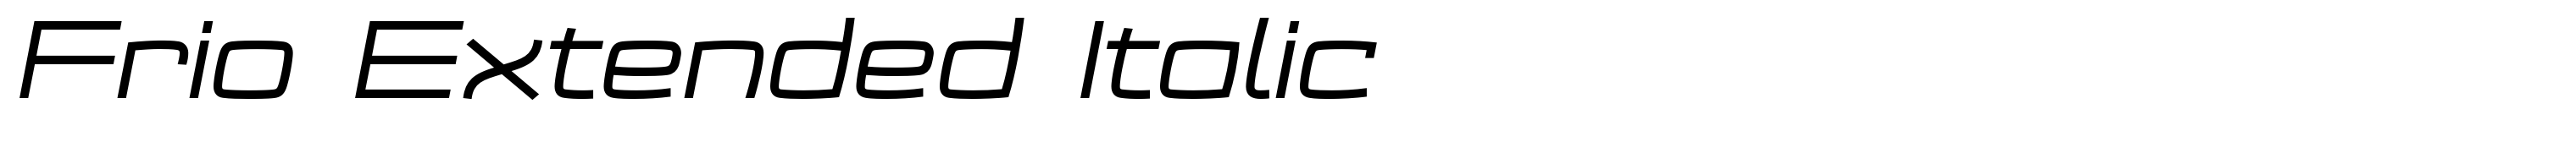 Frio Extended Italic